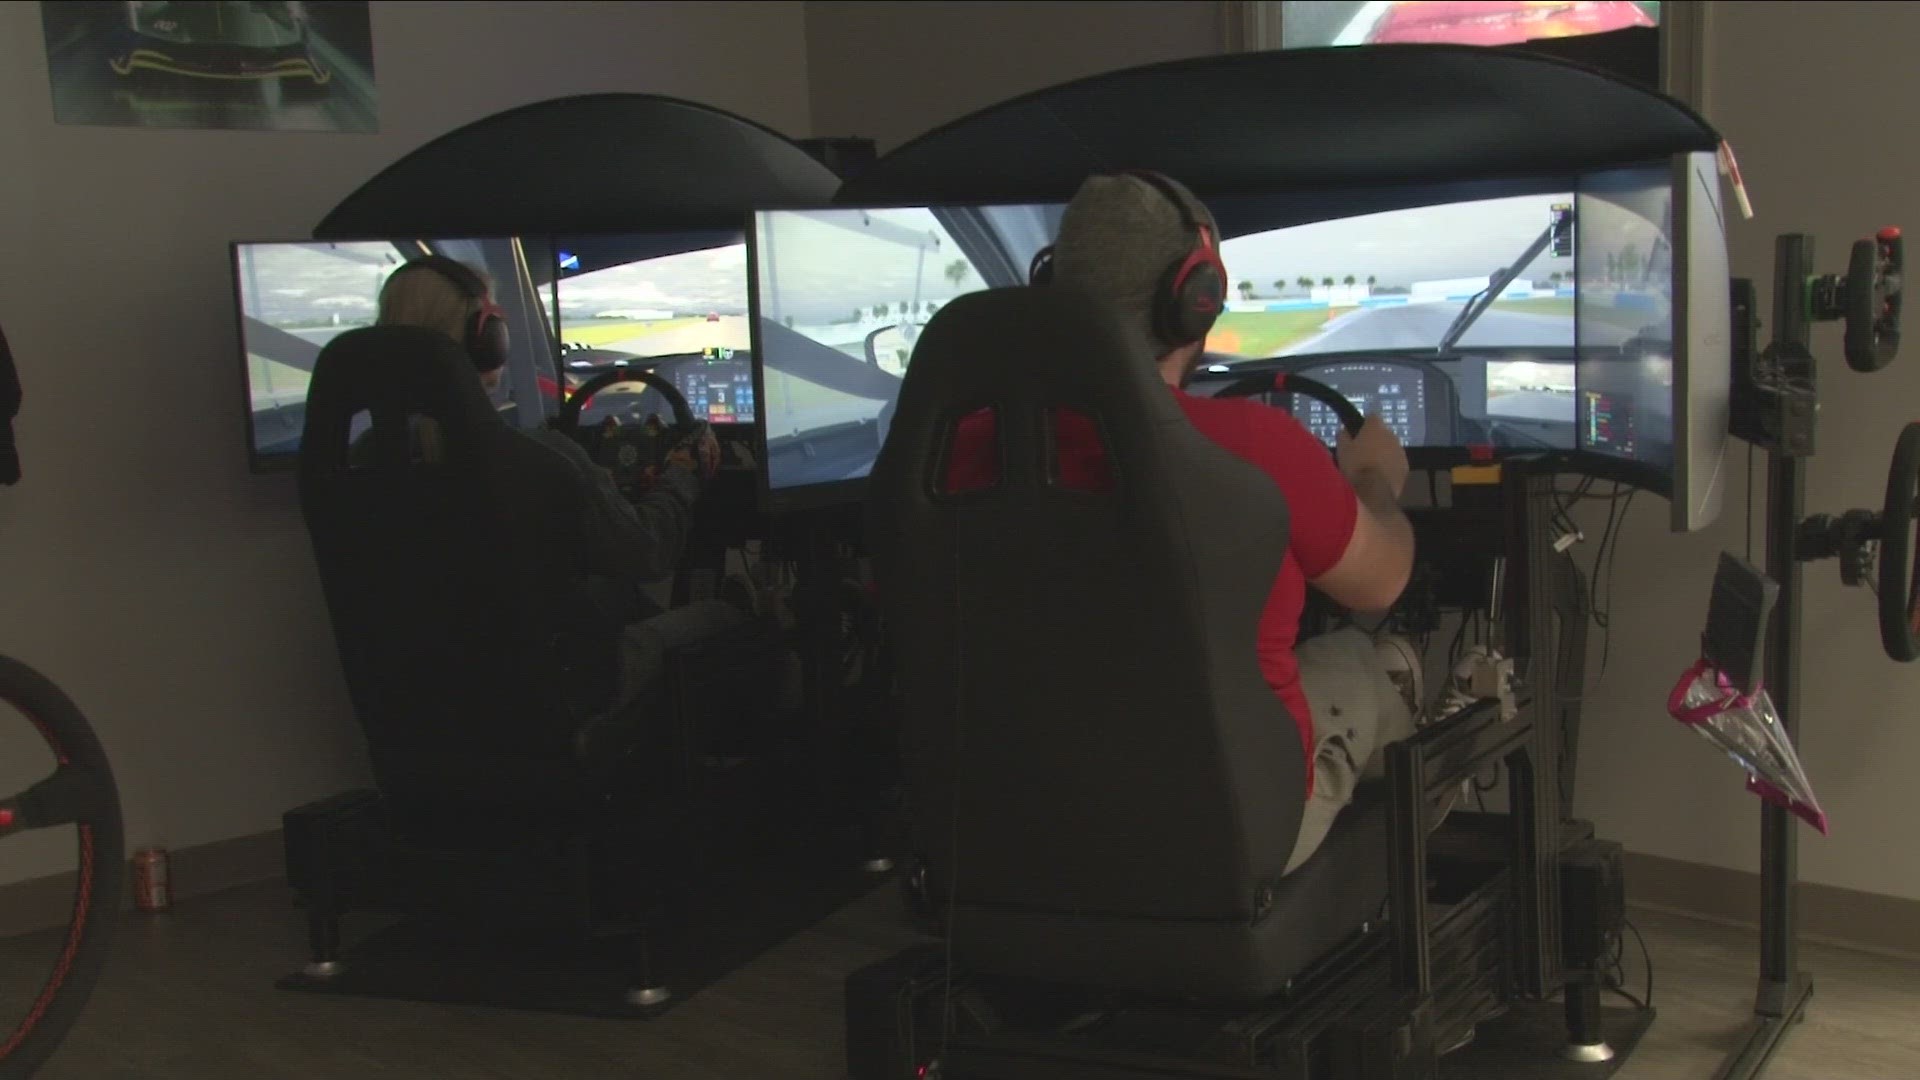 Send It Sim Racing has 10 full-motion, triple-screen simulators at its Amherst location.